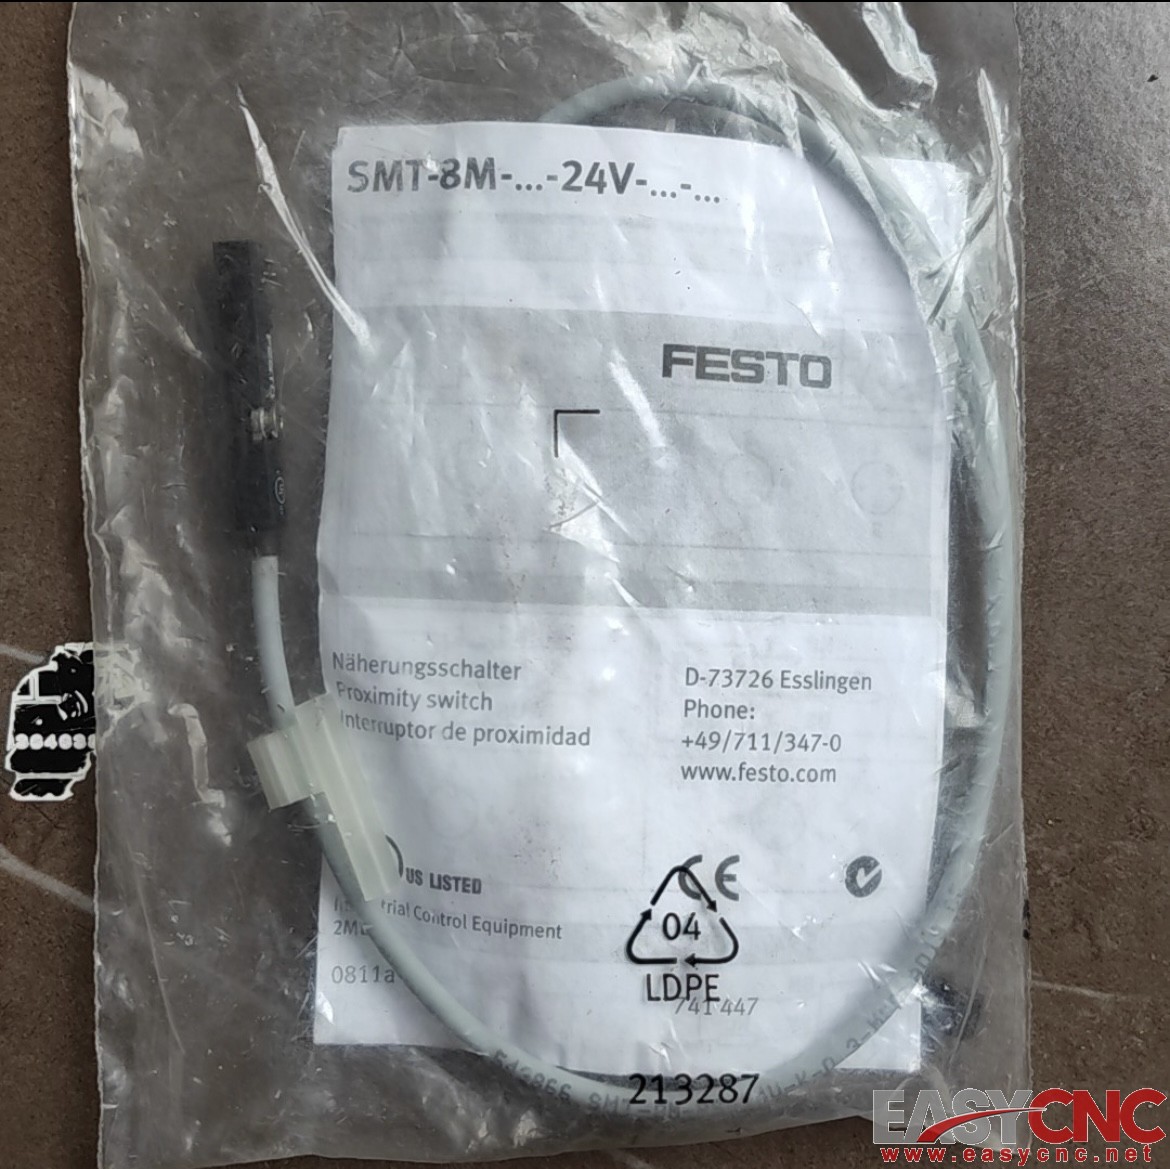 574337 SMT-8M-A-PS-24V-E-0.3-M12 FESTO Magnetic switch New And Original